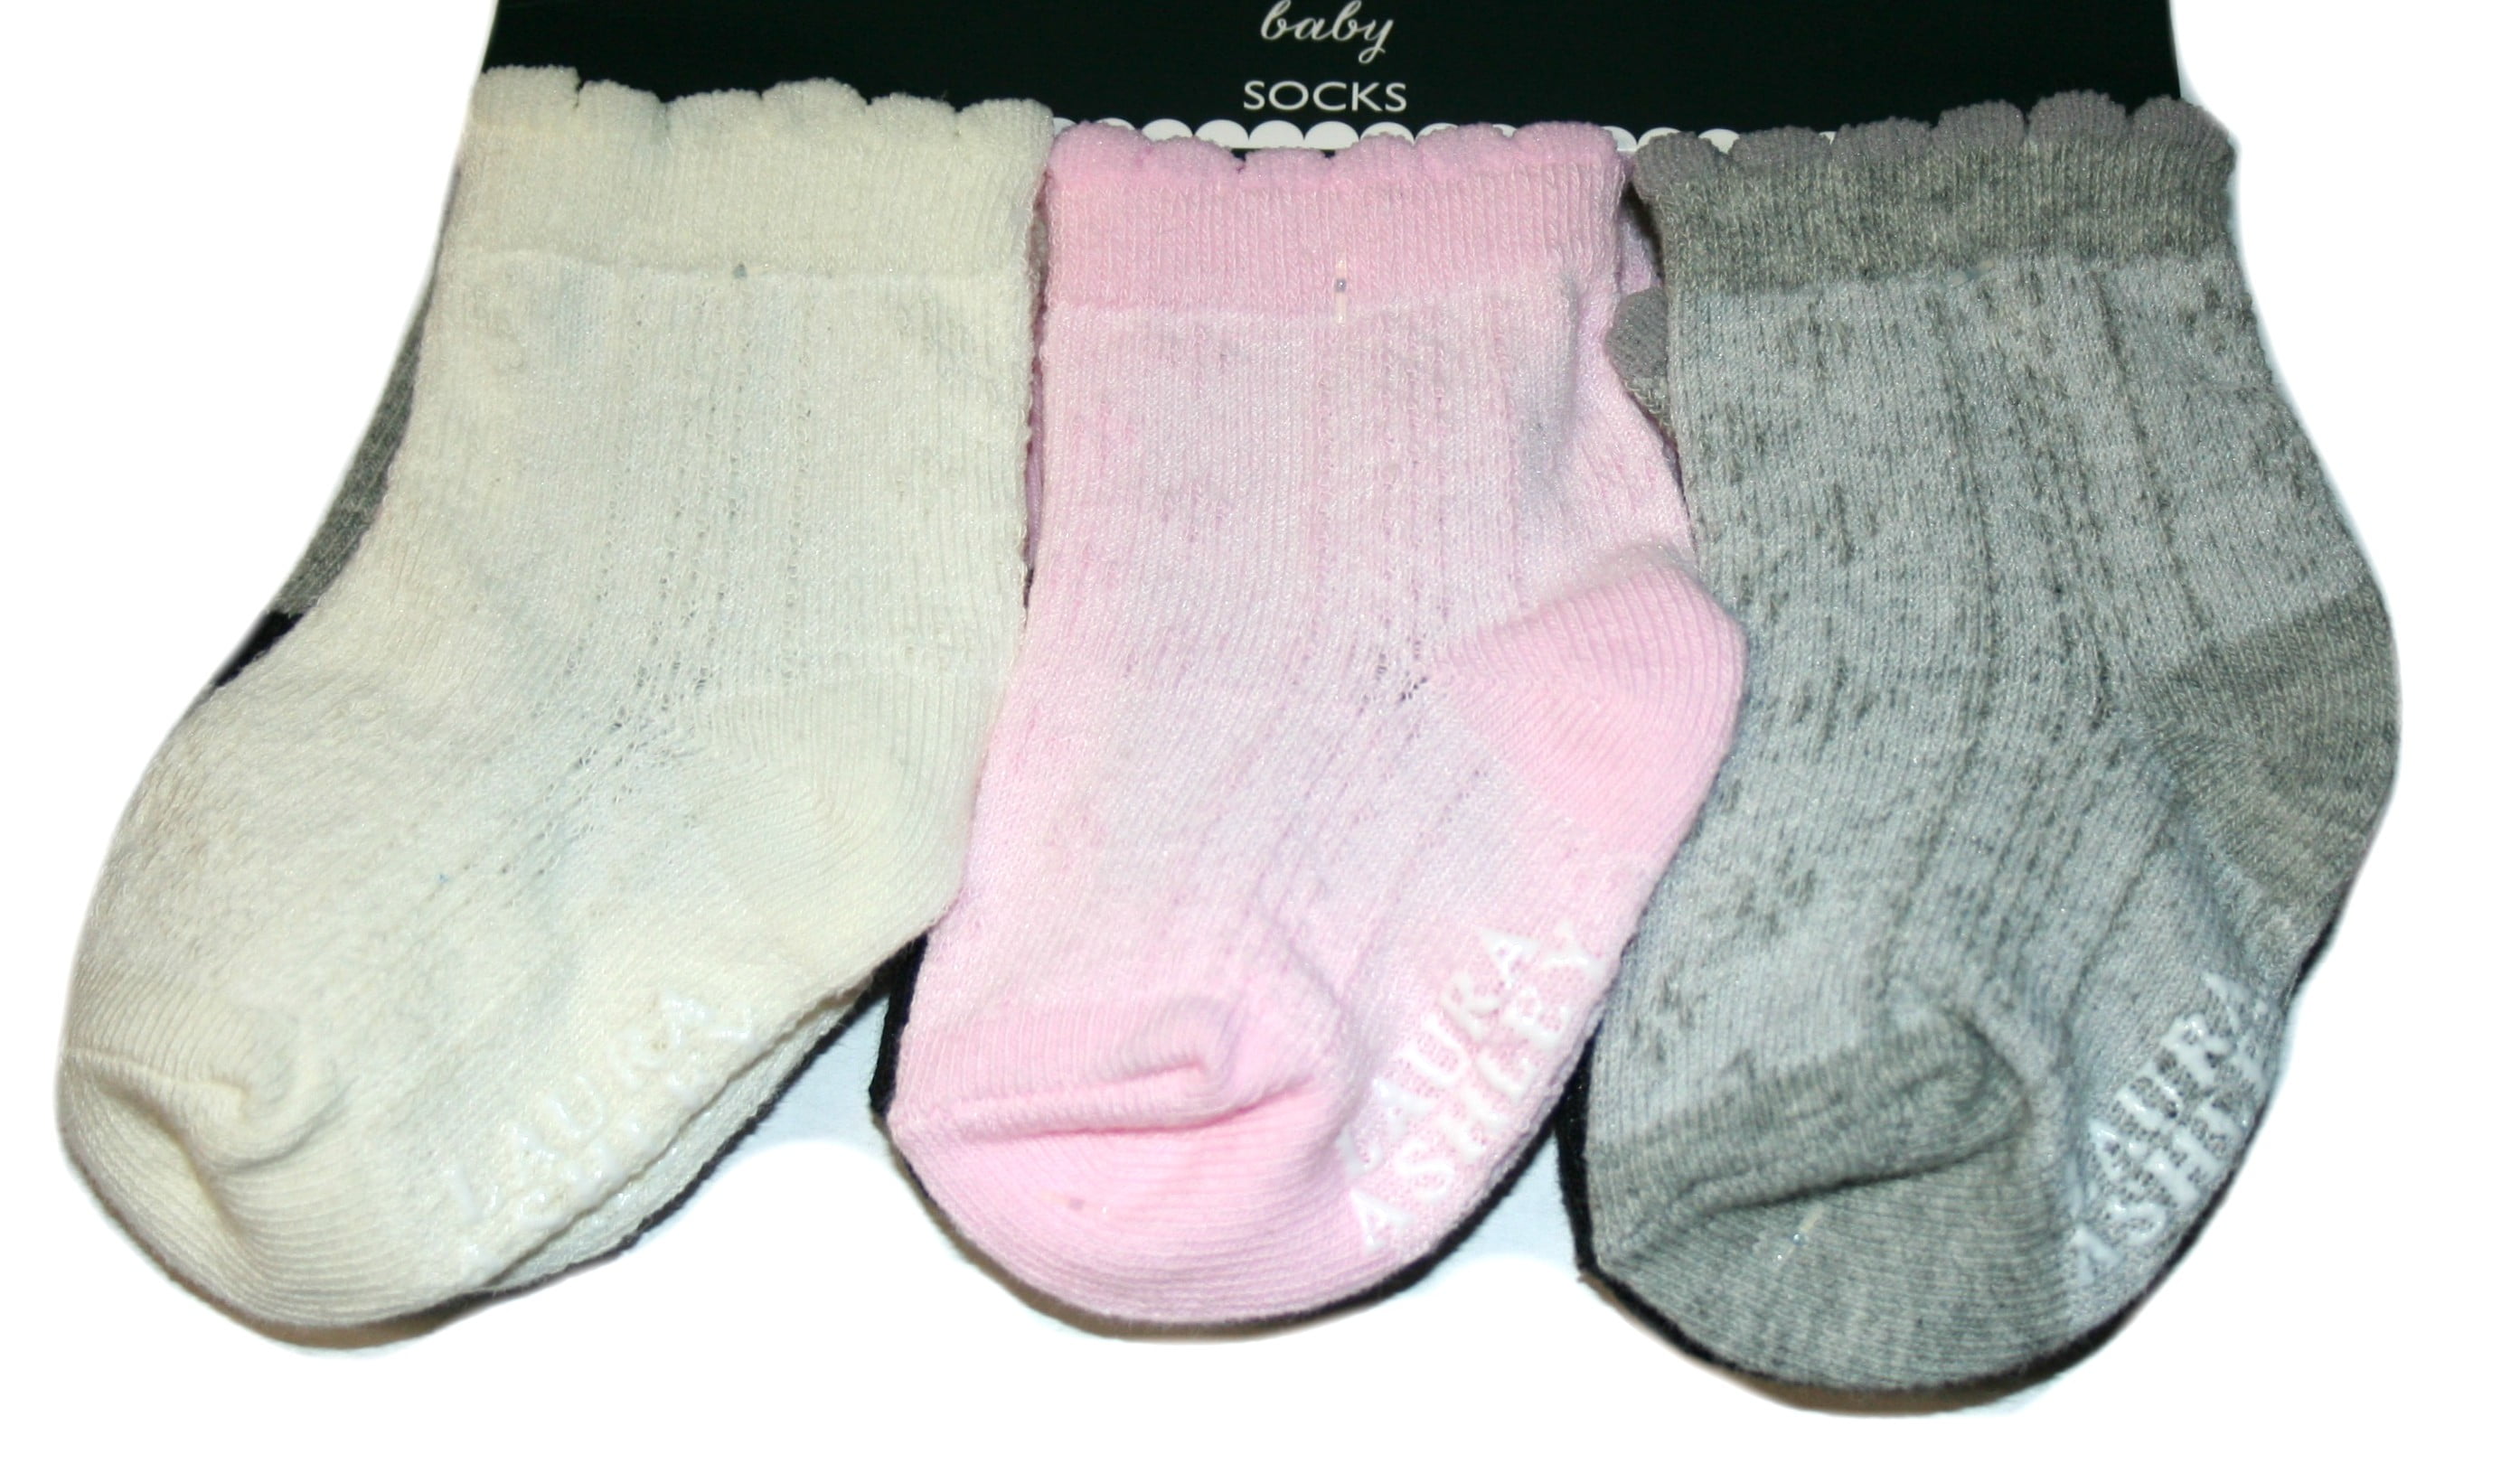 Laura Ashley Baby-Girl Socks 6 pairs, 6 